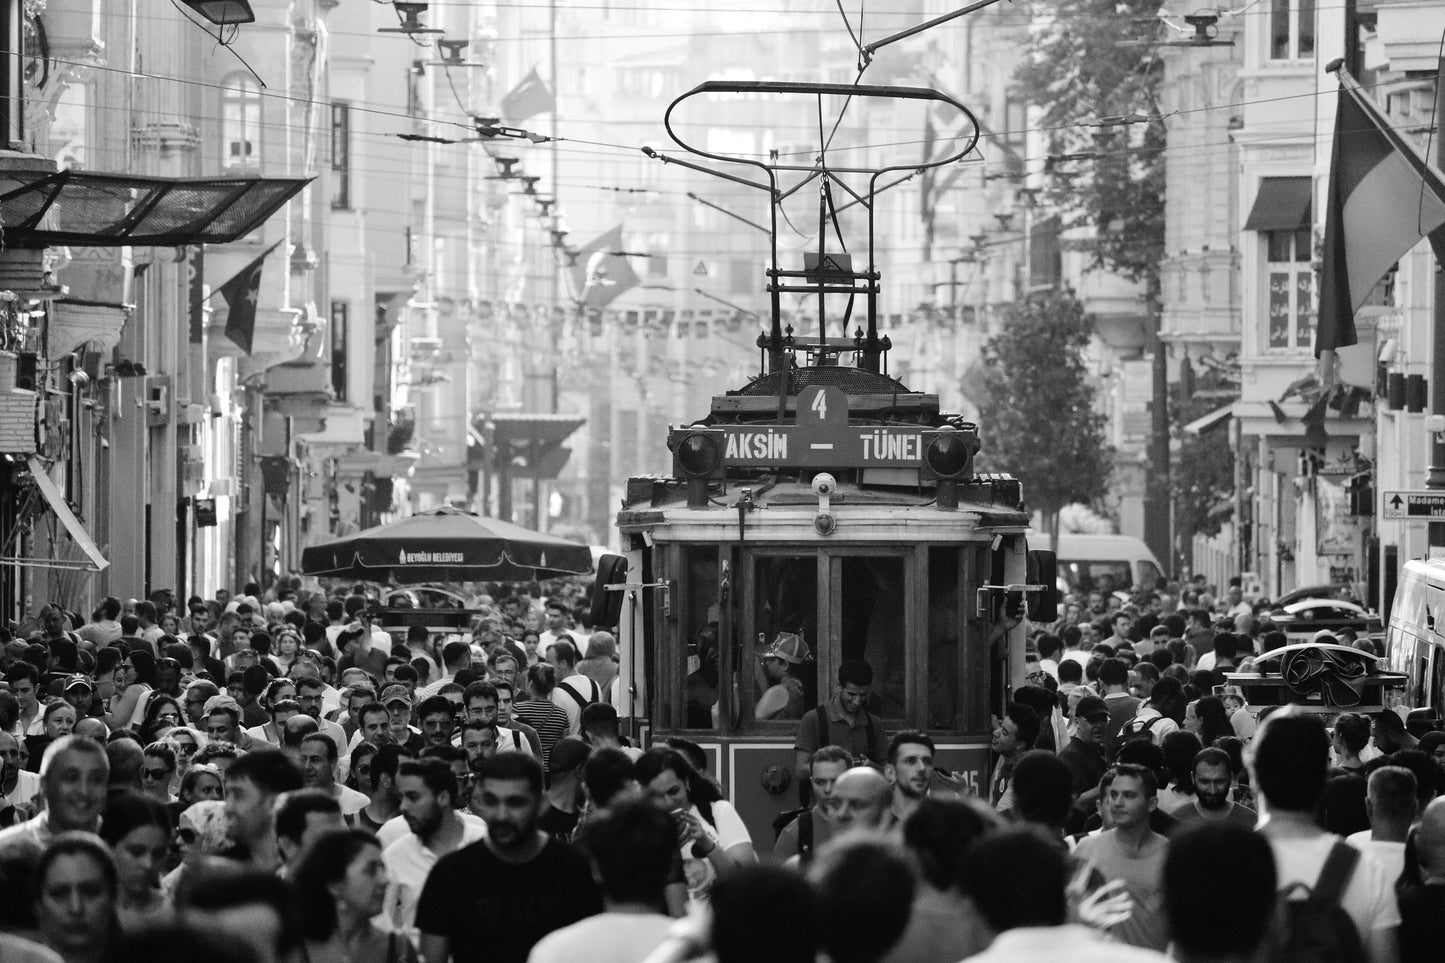 Istanbul Taksim Tram Street Black And White Photography Print Wall Art